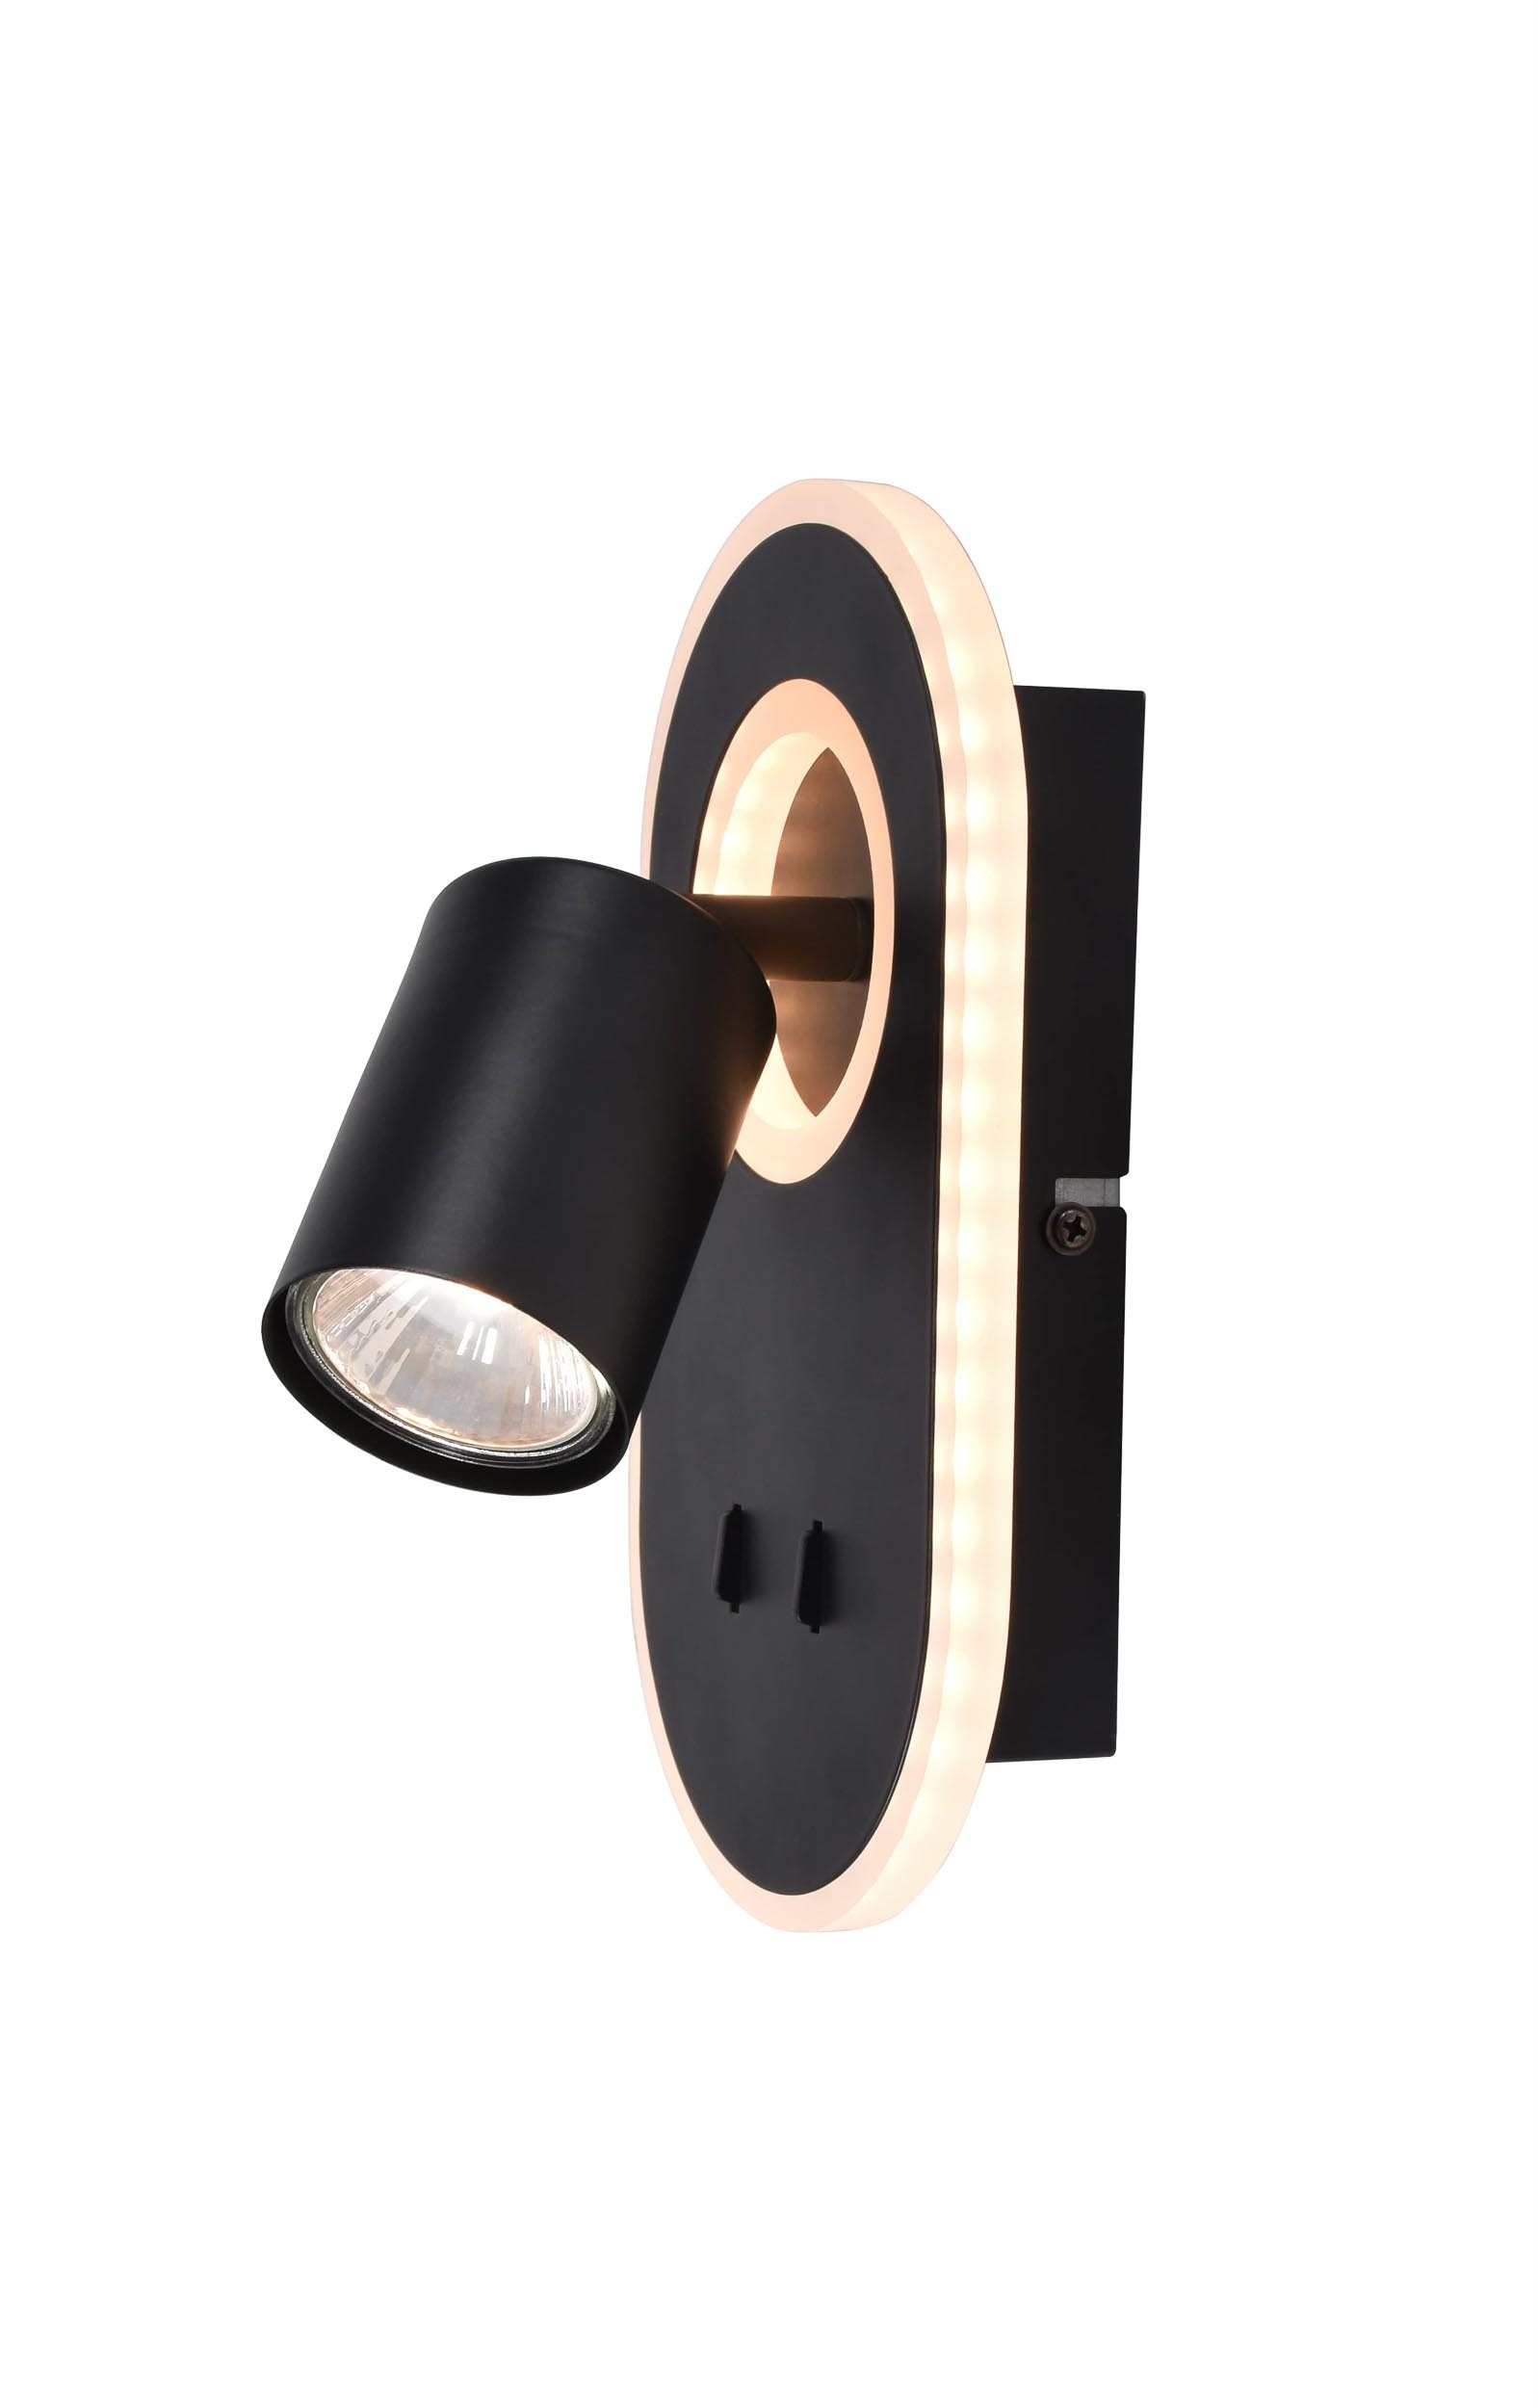 Brilliant LED Wandstrahler »Kimon«, 1 flammig-flammig, inkl. Schalter, 22 cm Höhe, GU10, Metall/Kunststoff, schwarz